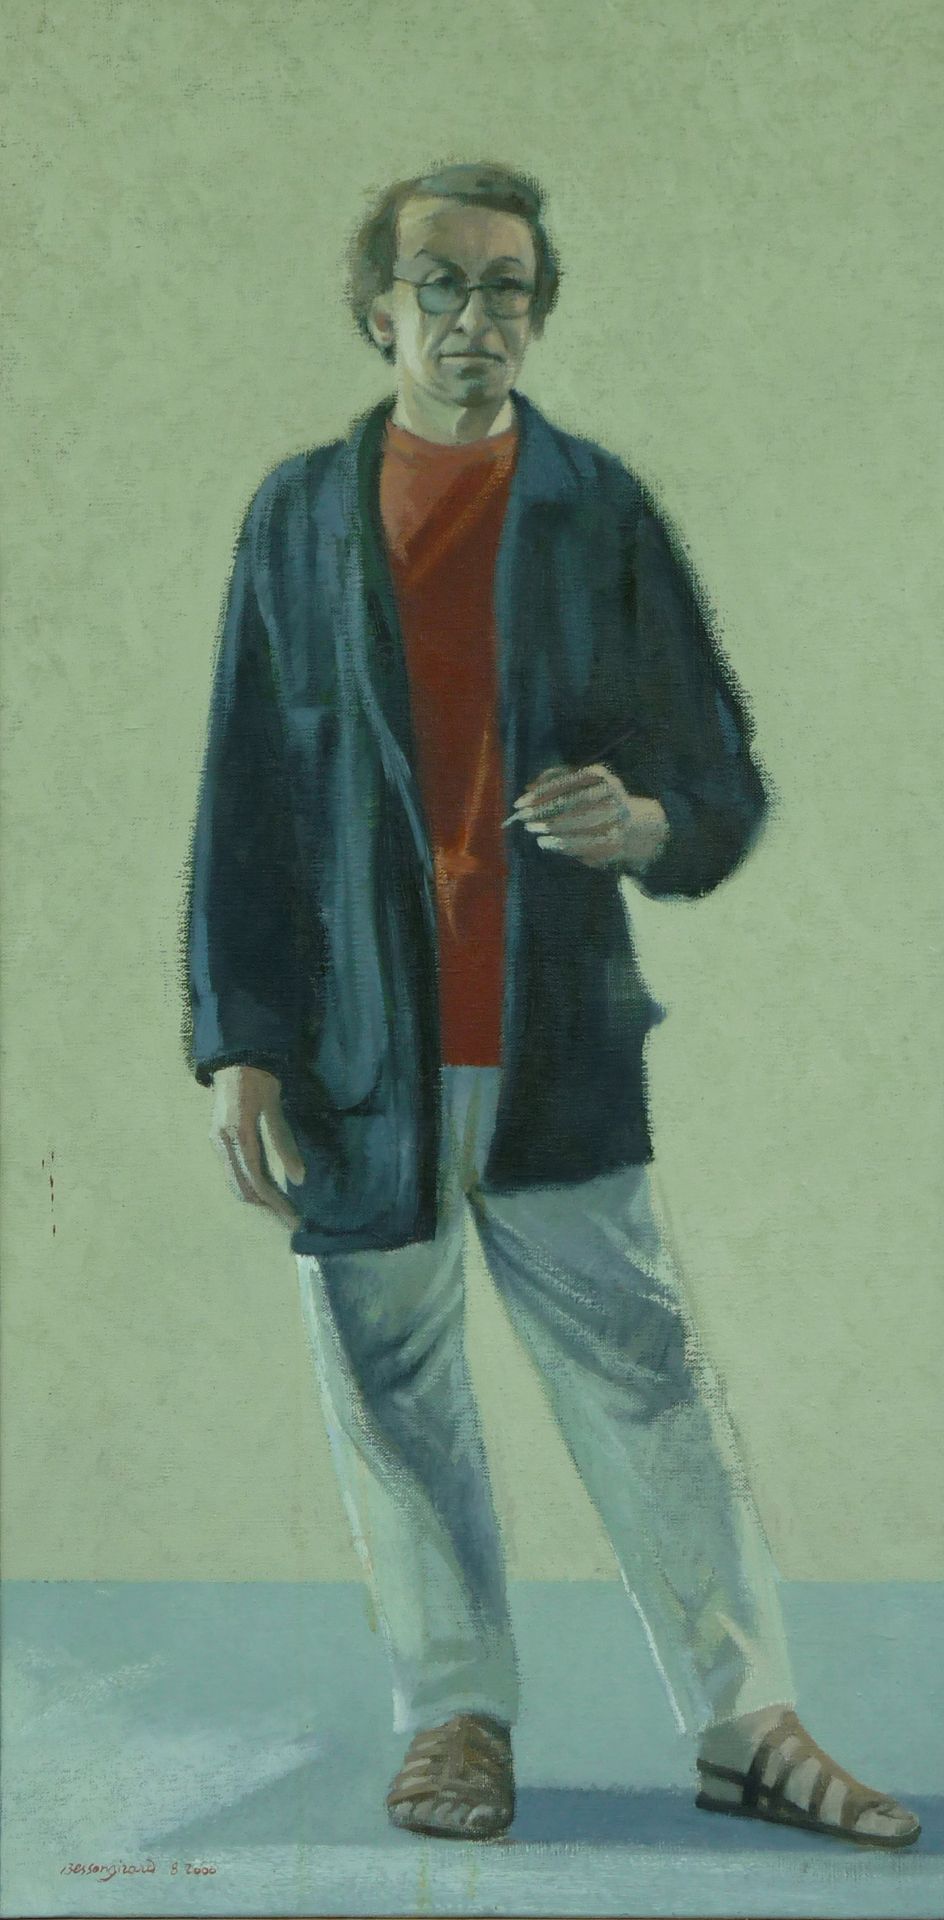 Null 让-克劳德-贝松-吉拉尔 (1938-2021)

自画像，2000年

布面油画，左下方有签名和日期8/2000

80 x 40厘米